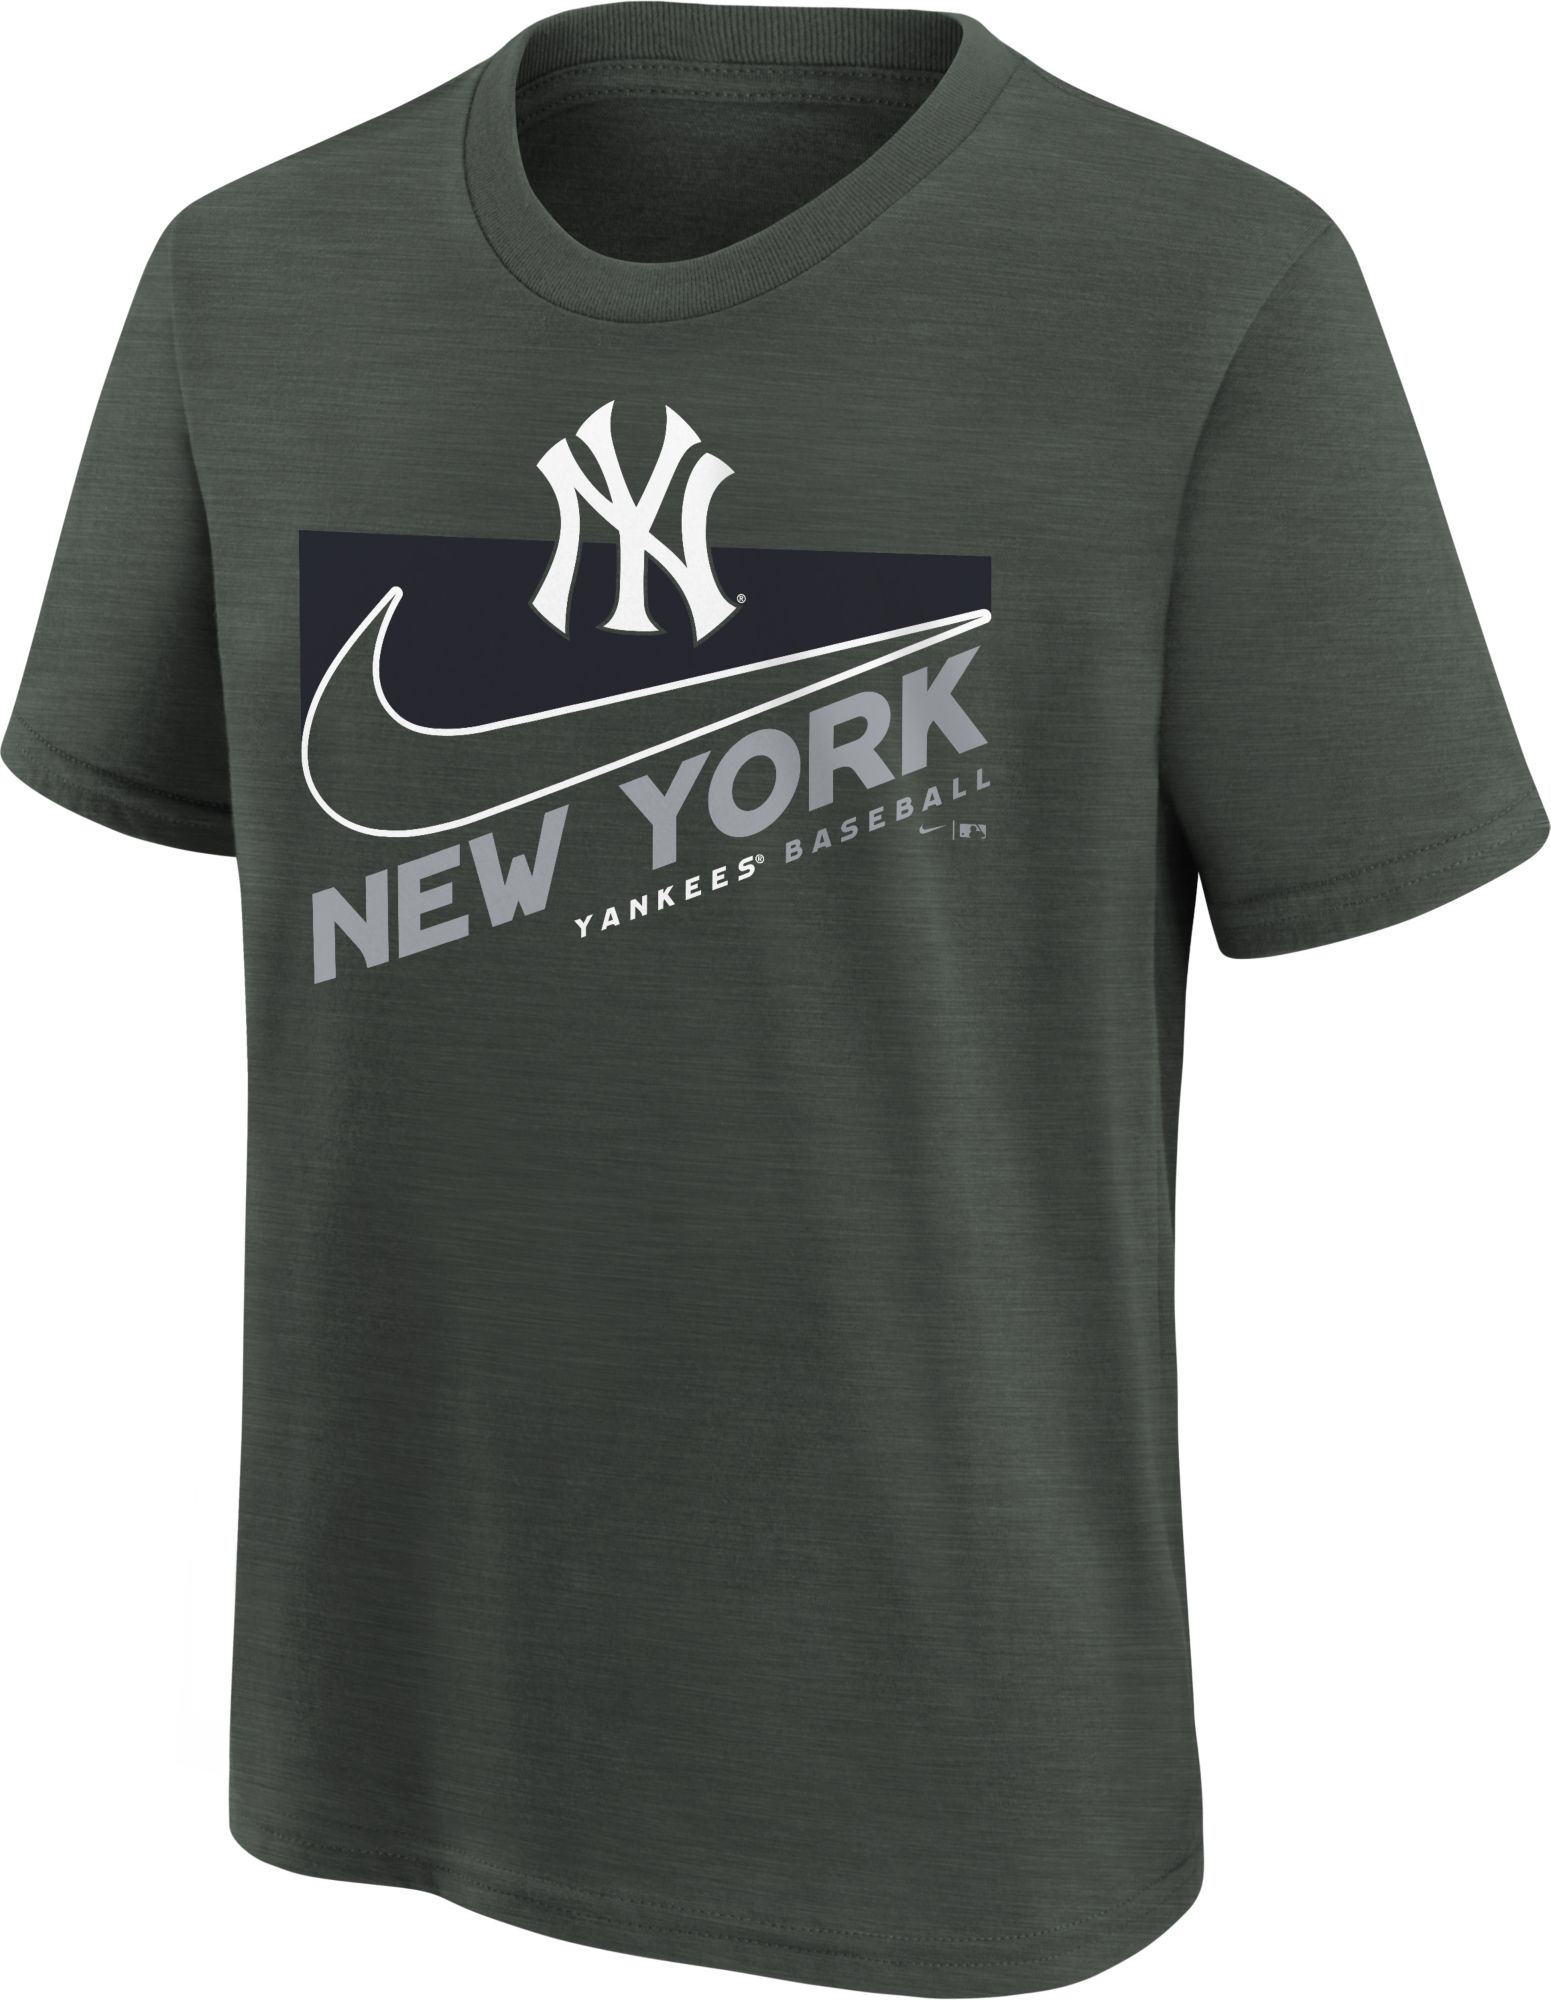 Men's New York Yankees Nike Logo Franchise Performance Shorts